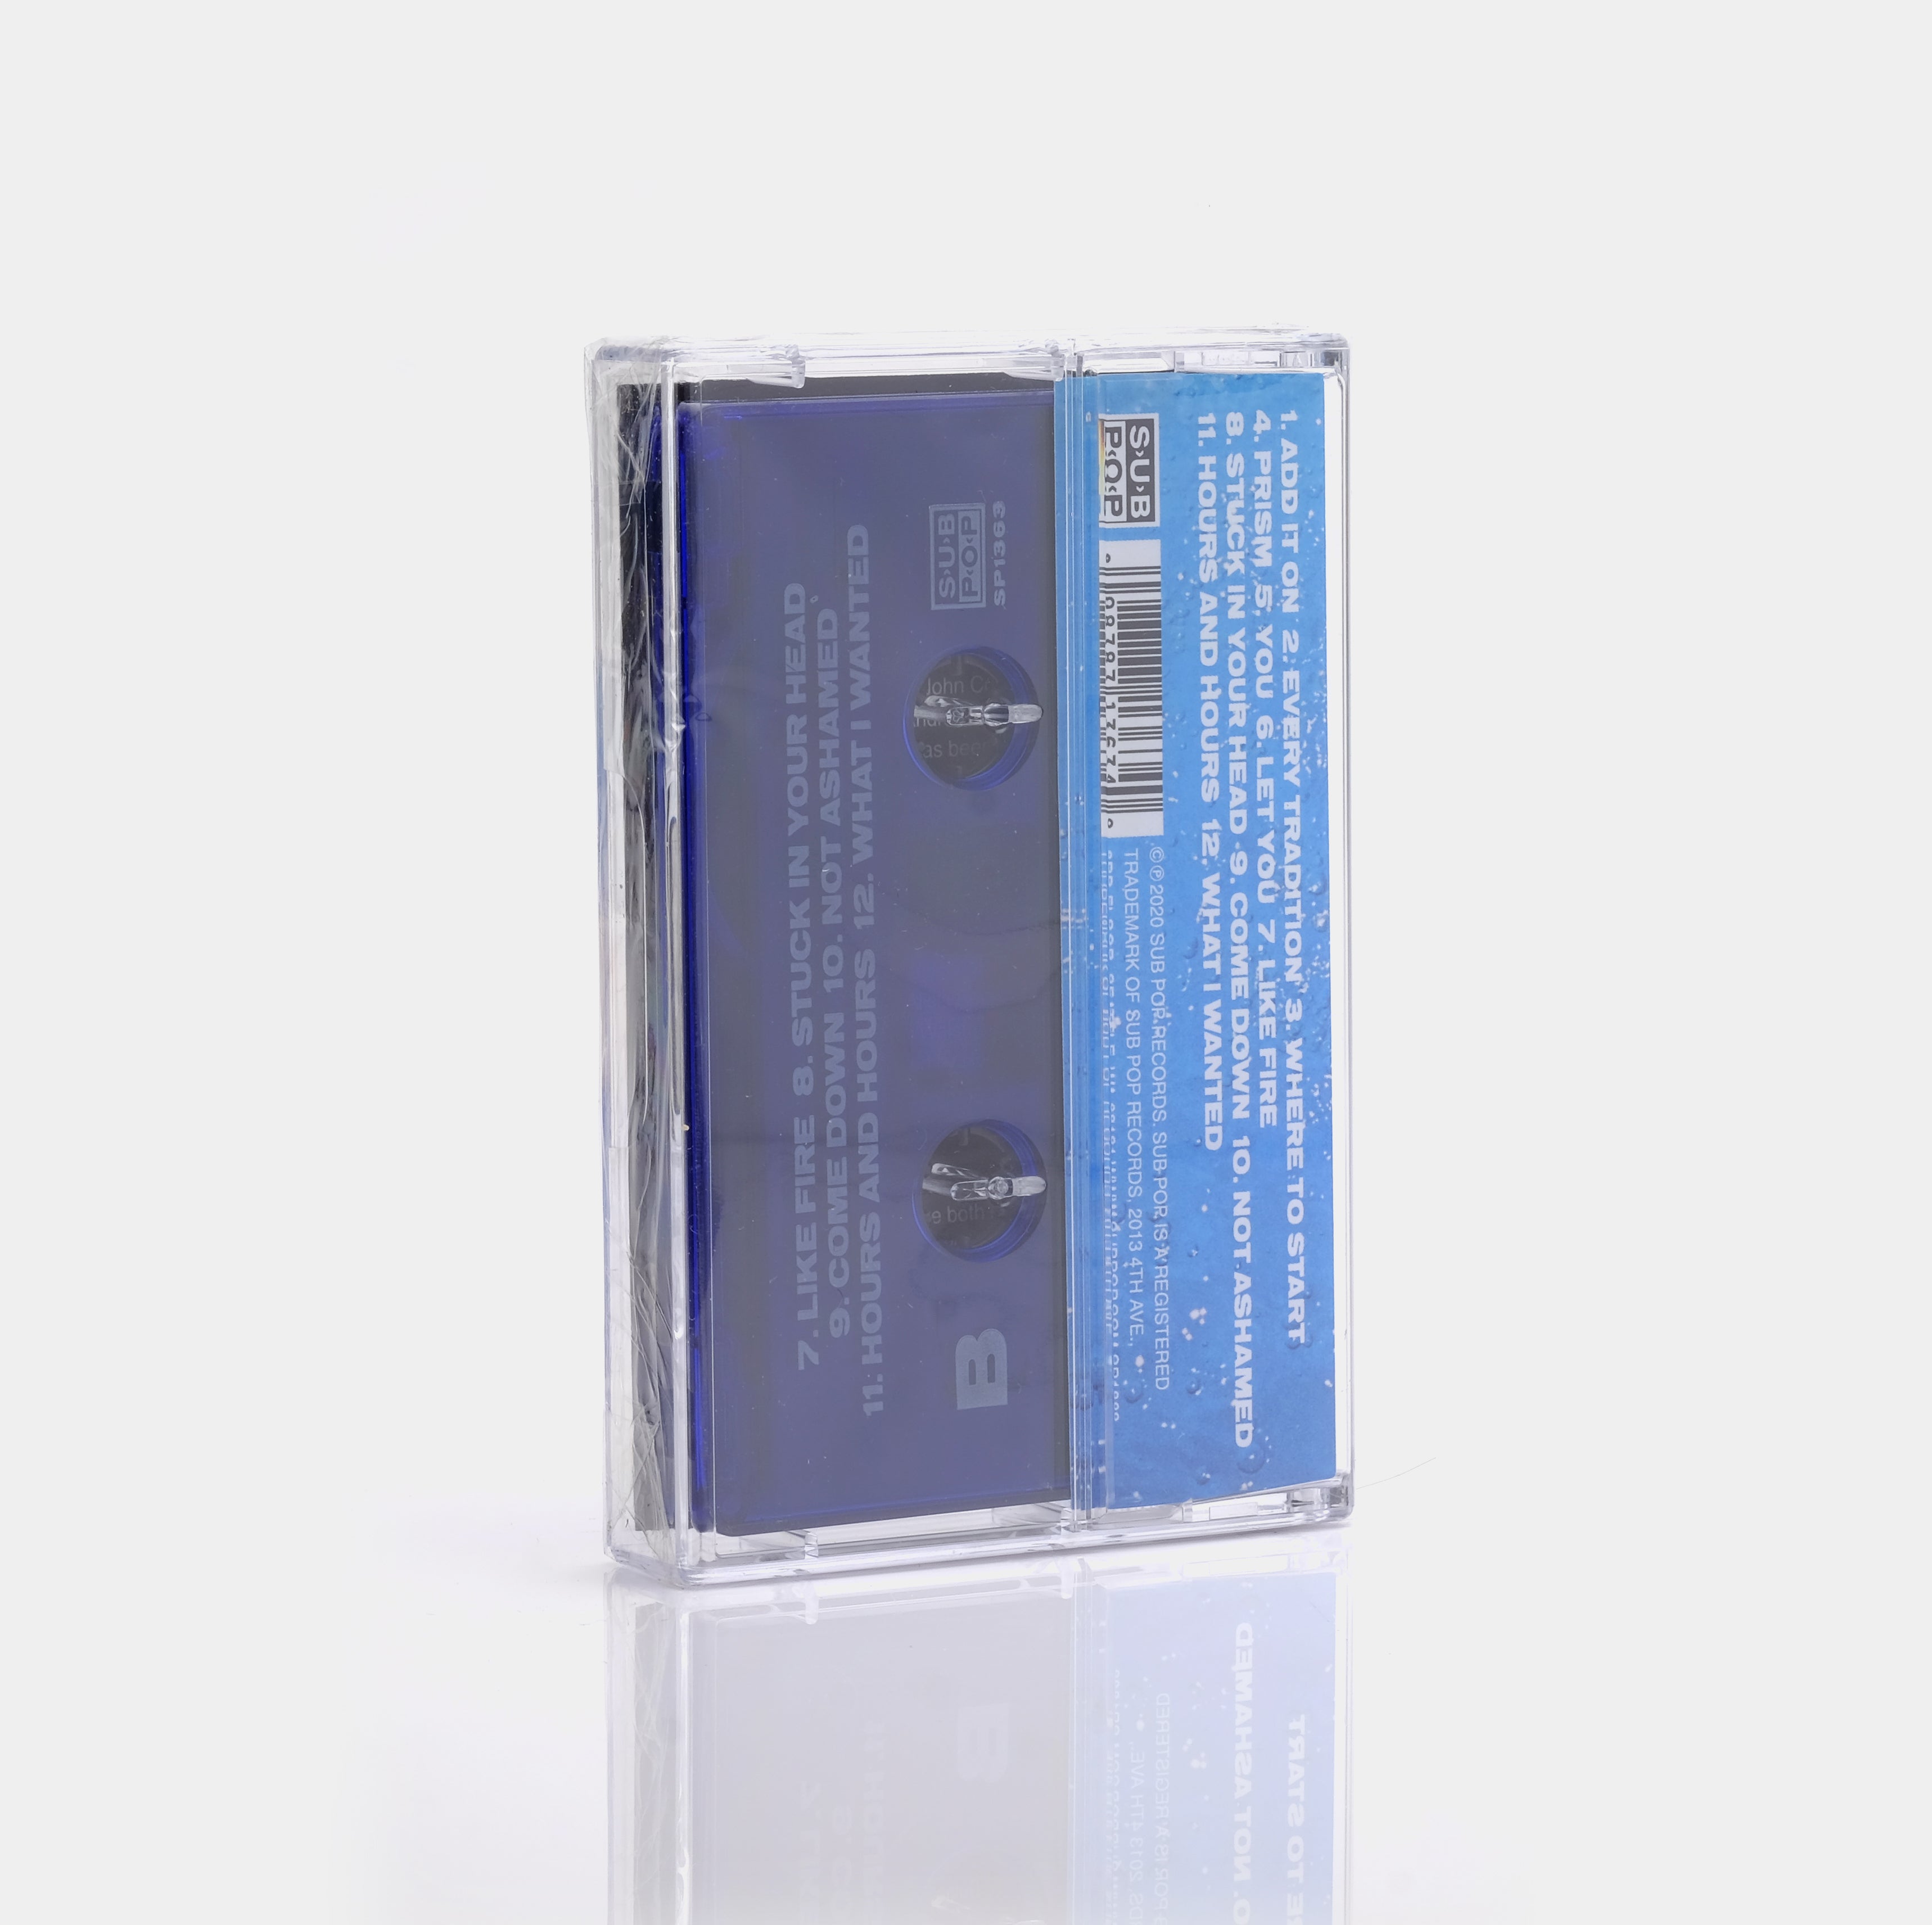 Bully - SUGAREGG Cassette Tape